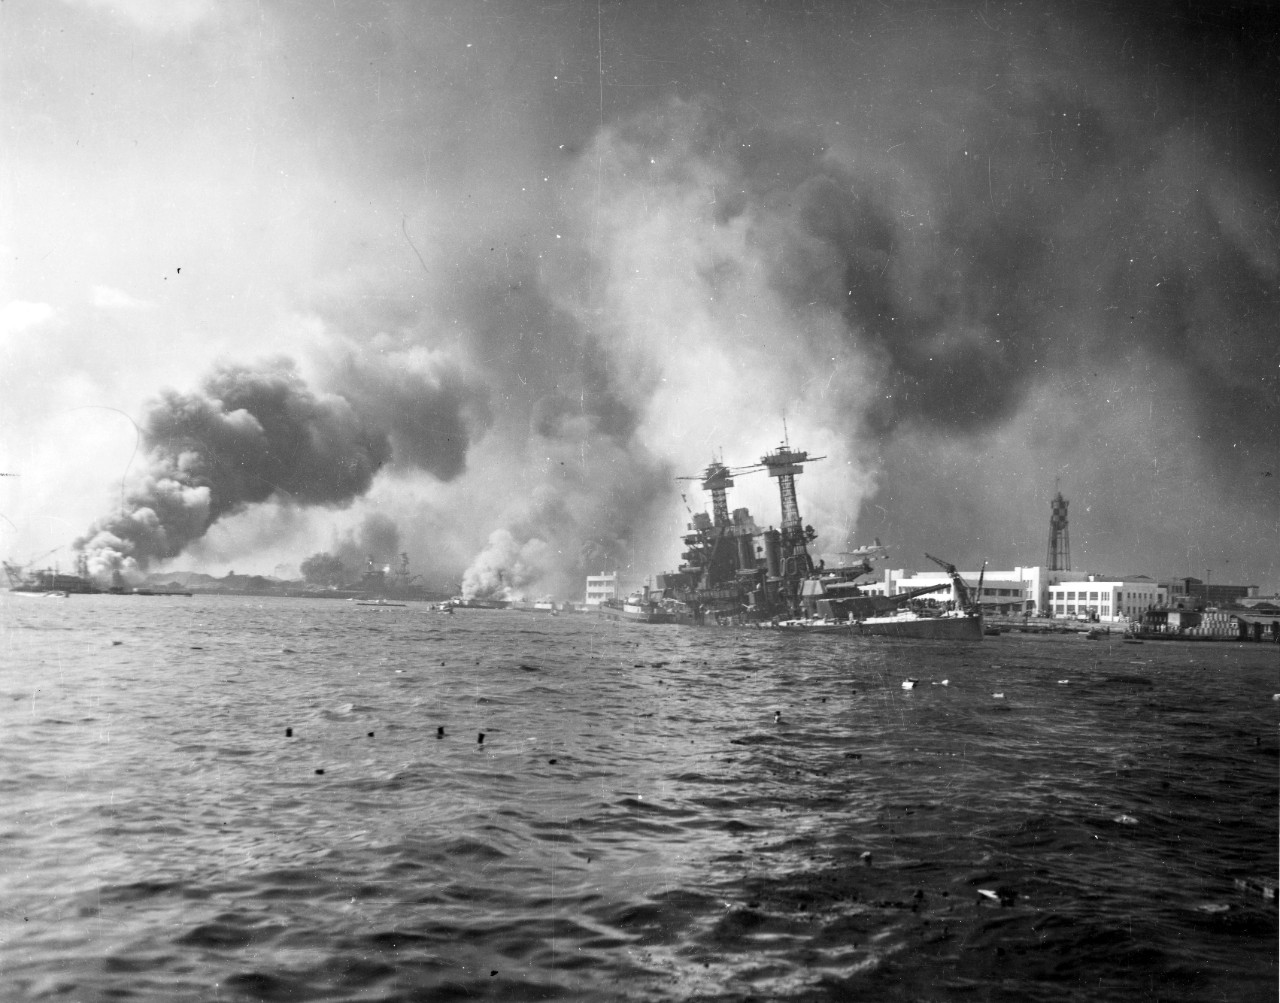 Stern view of USS California listing to port, Pearl Harbor, Oahu, US Territory of Hawaii, 7 Dec 1941